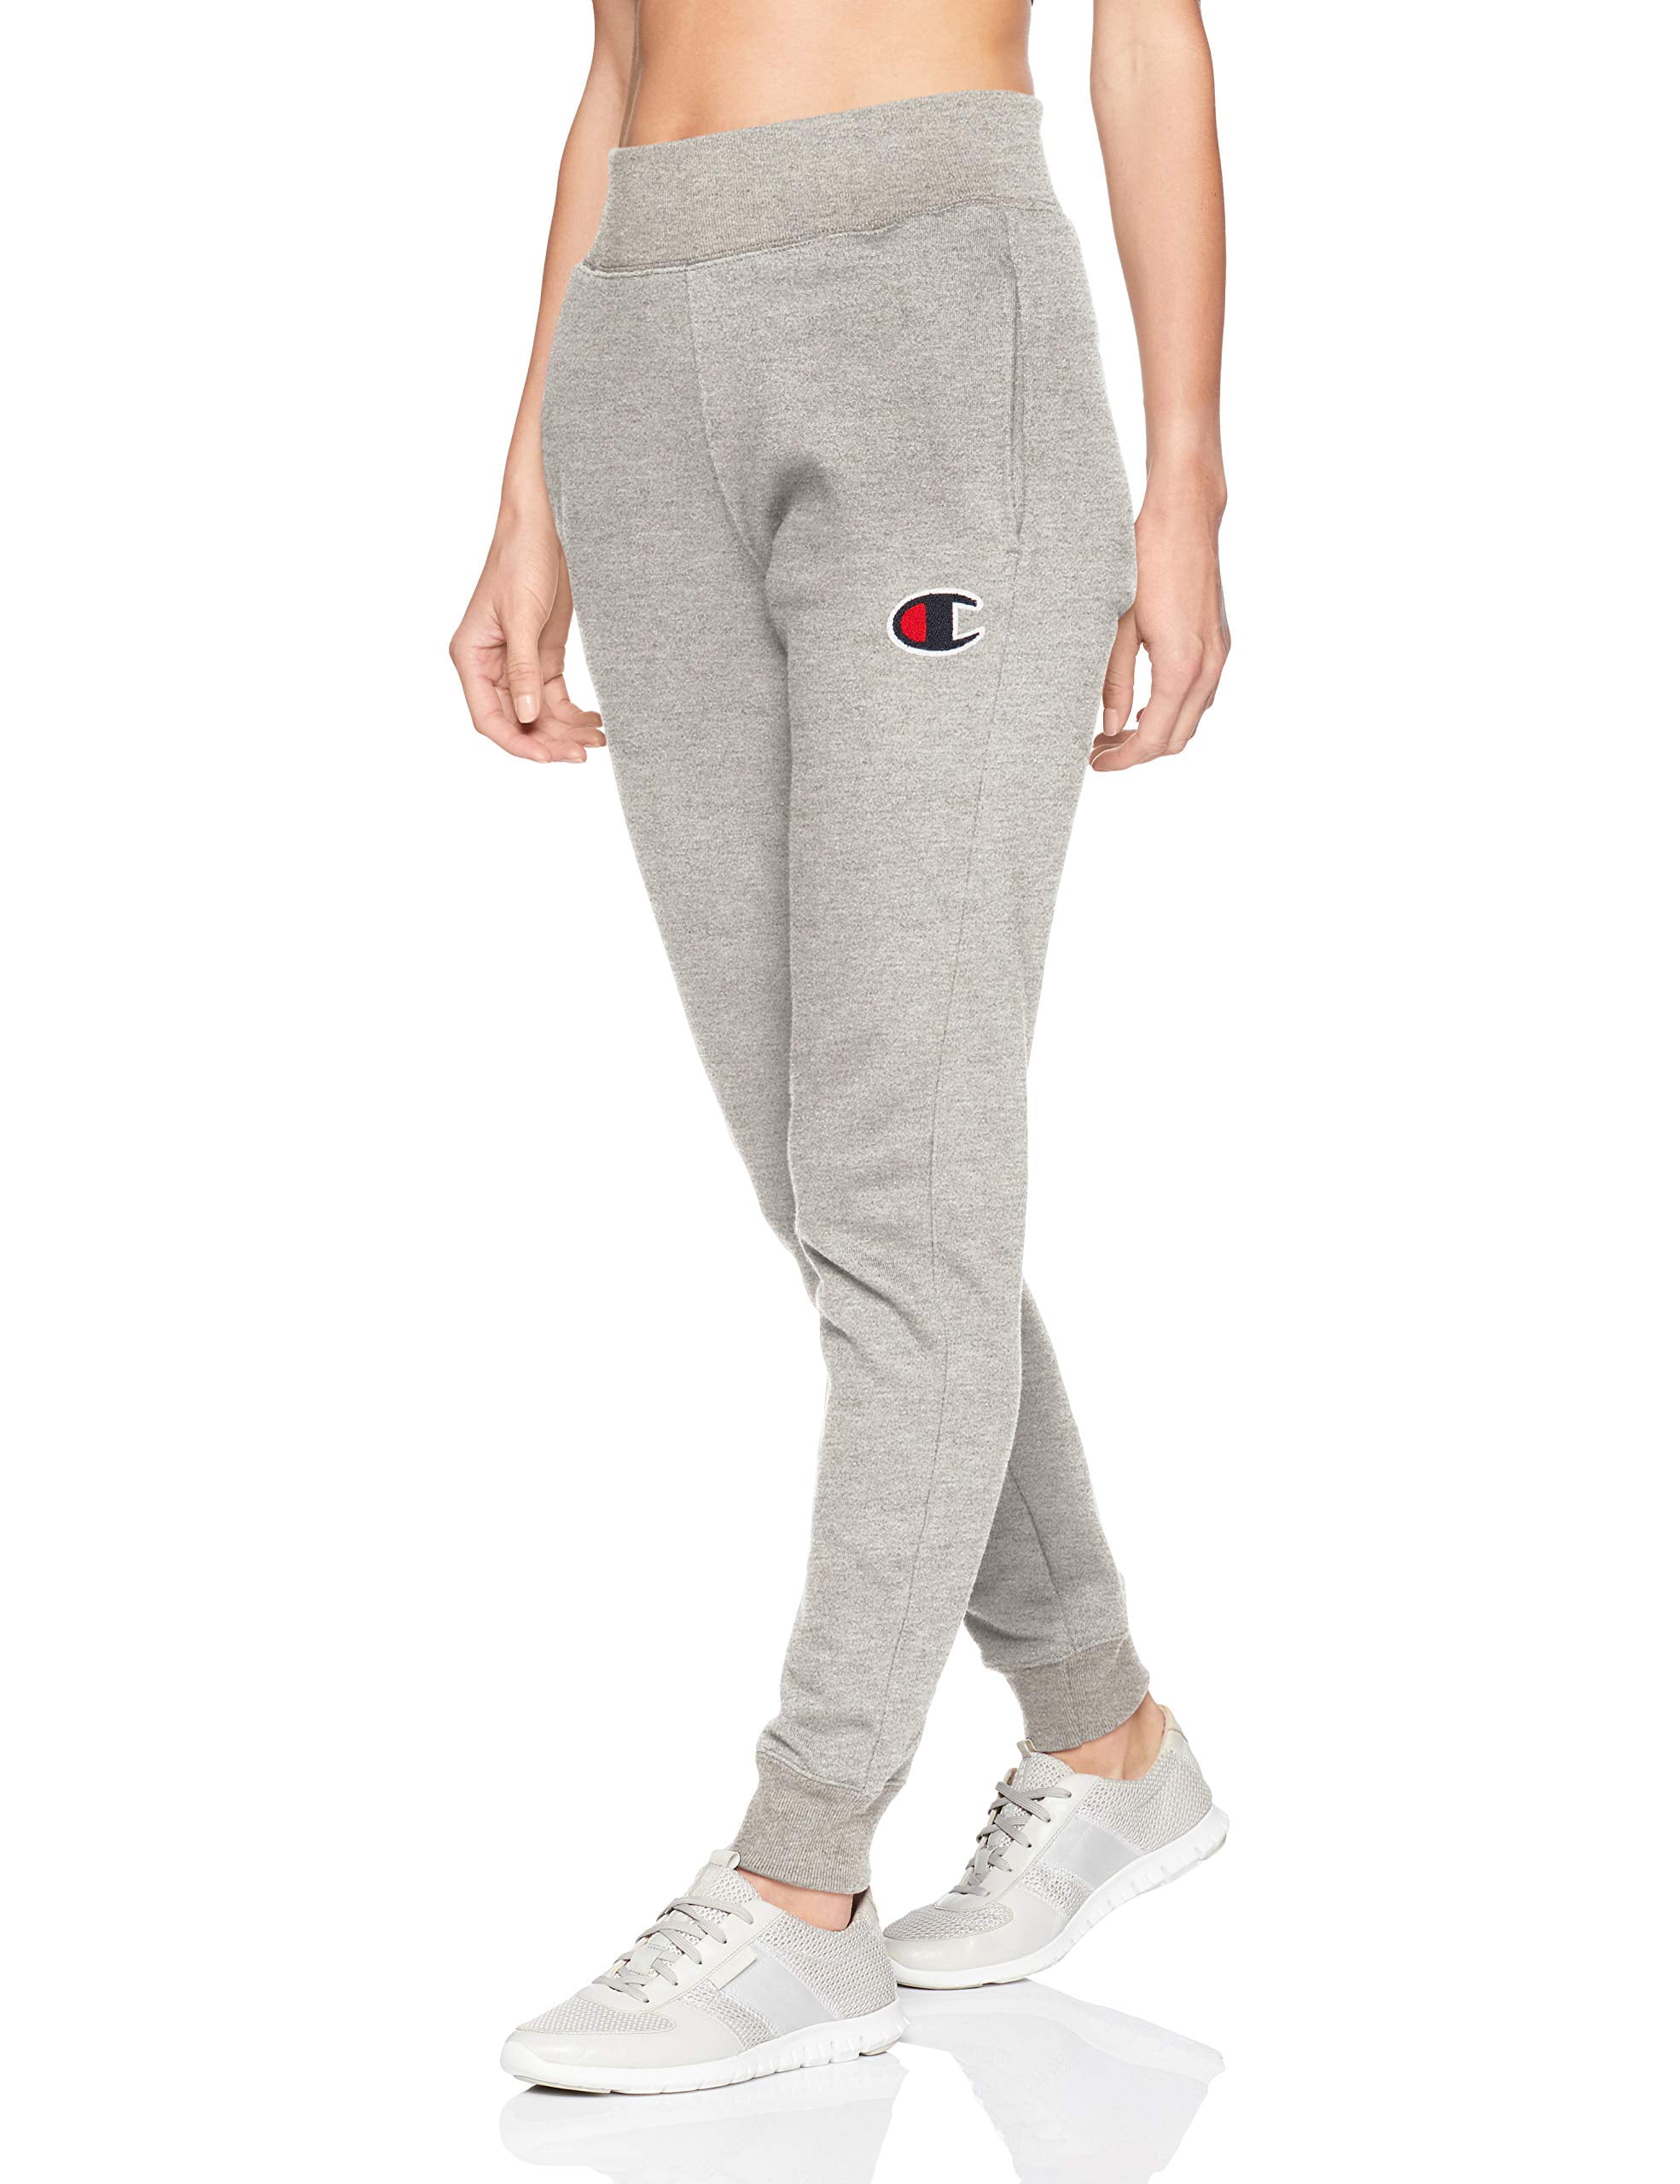 Women's Grey Champion Sweatpants with Chainstitch Big C Logo